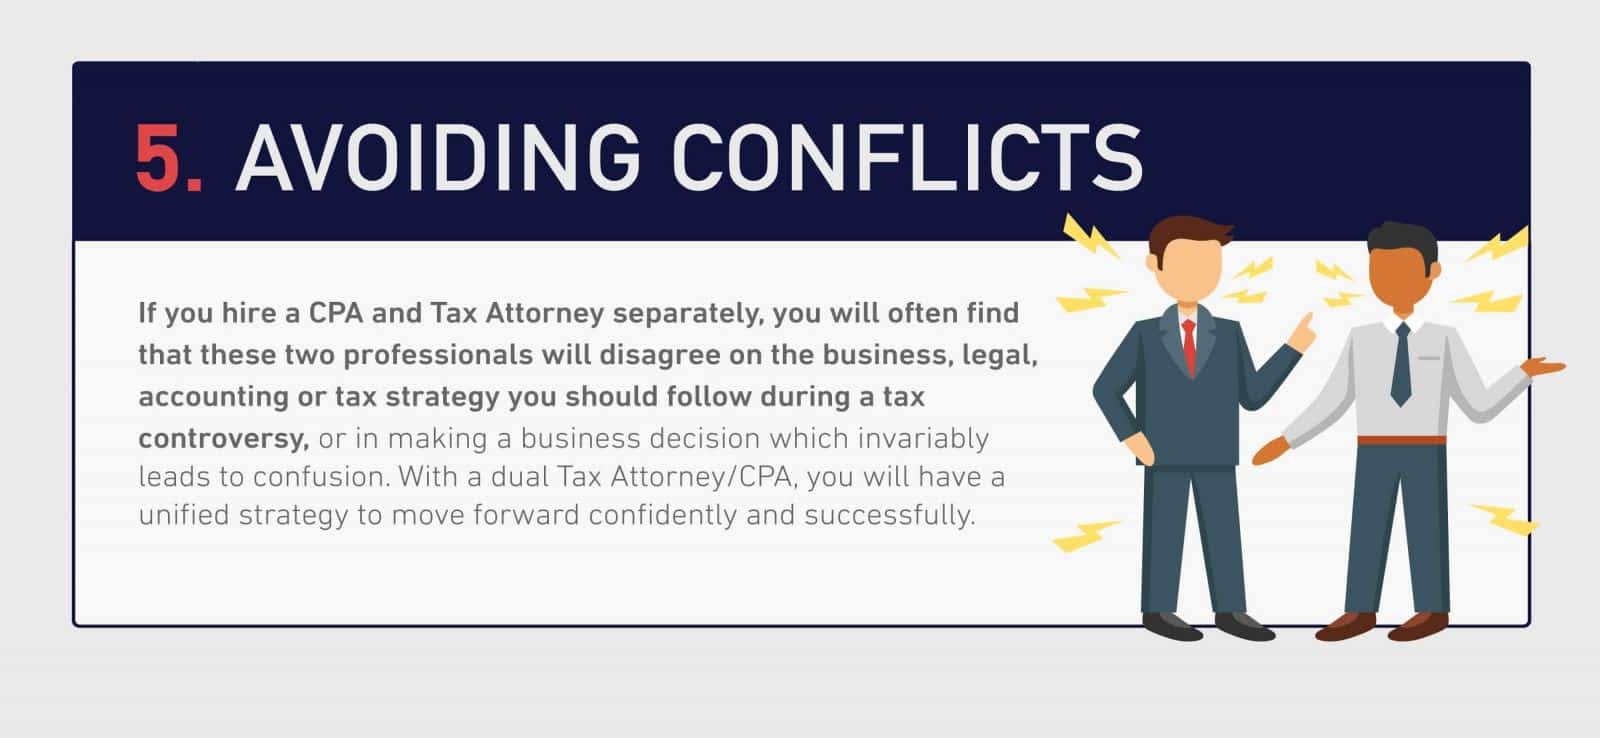 Avoiding-conflicts-klasing-associates-san-francisco-tax-attorney